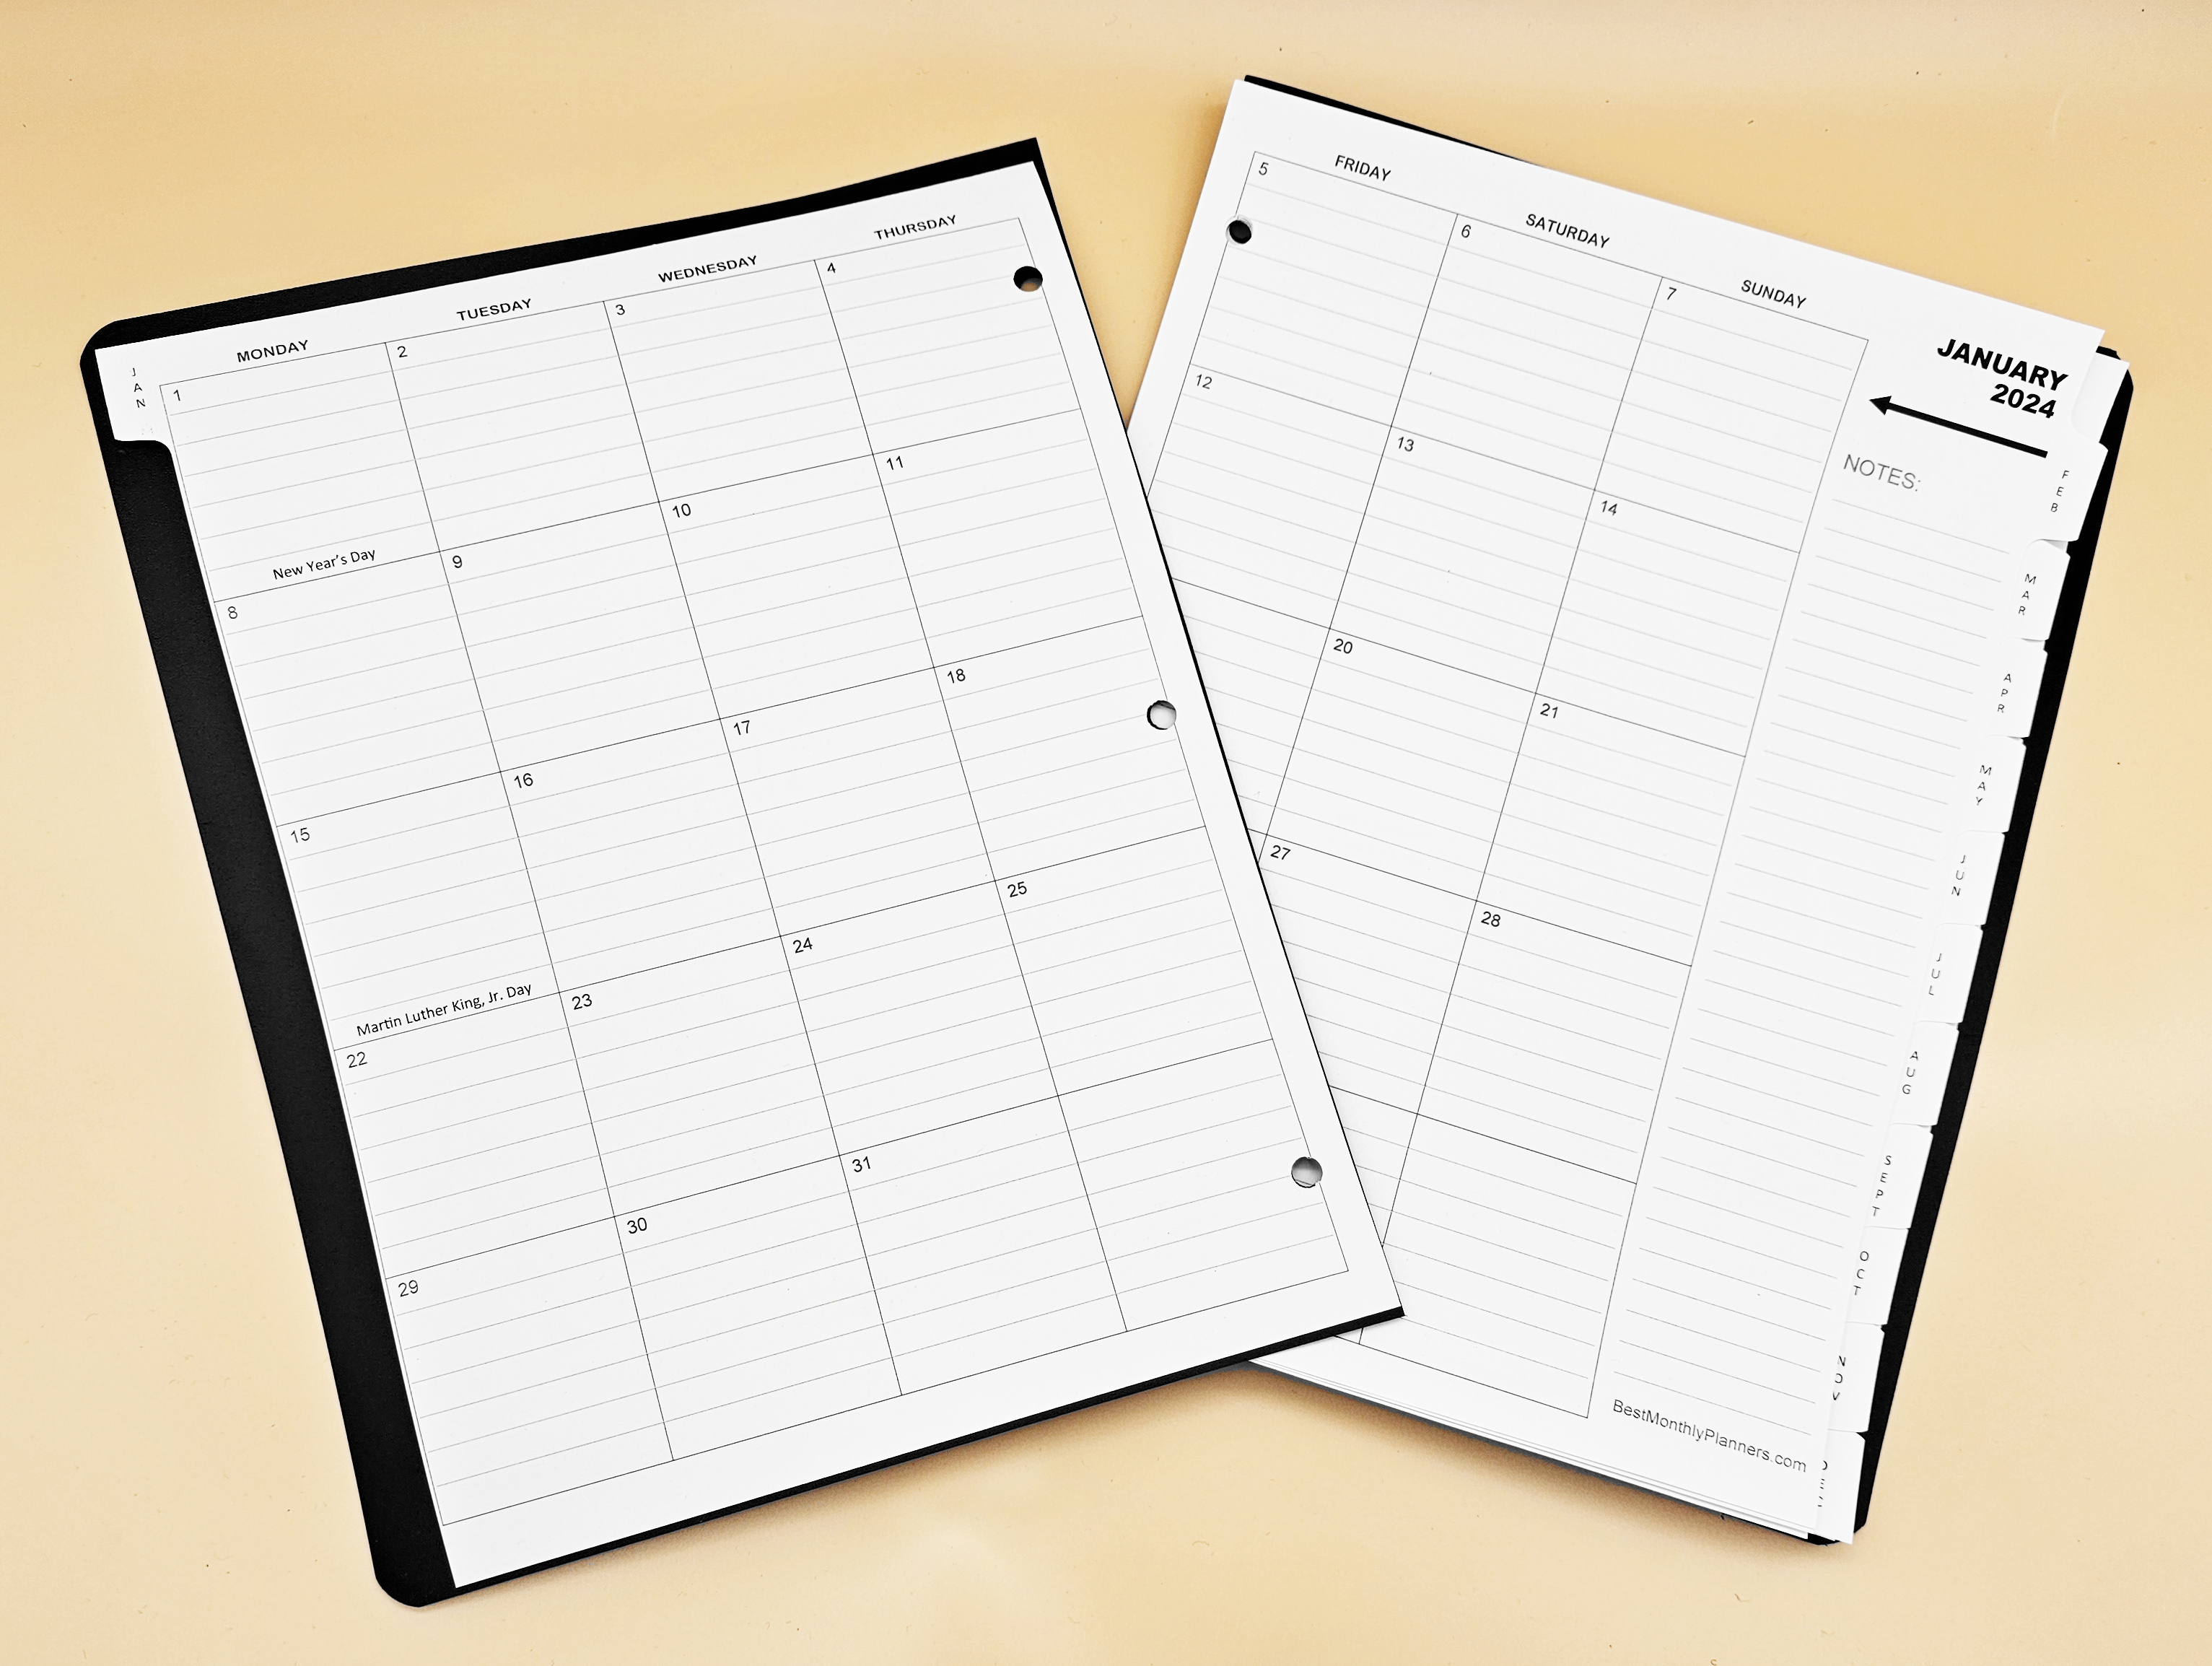 Best Monthly Planners Organizational Calendar - Open Page View of a Spiral Bound Planning Calendar